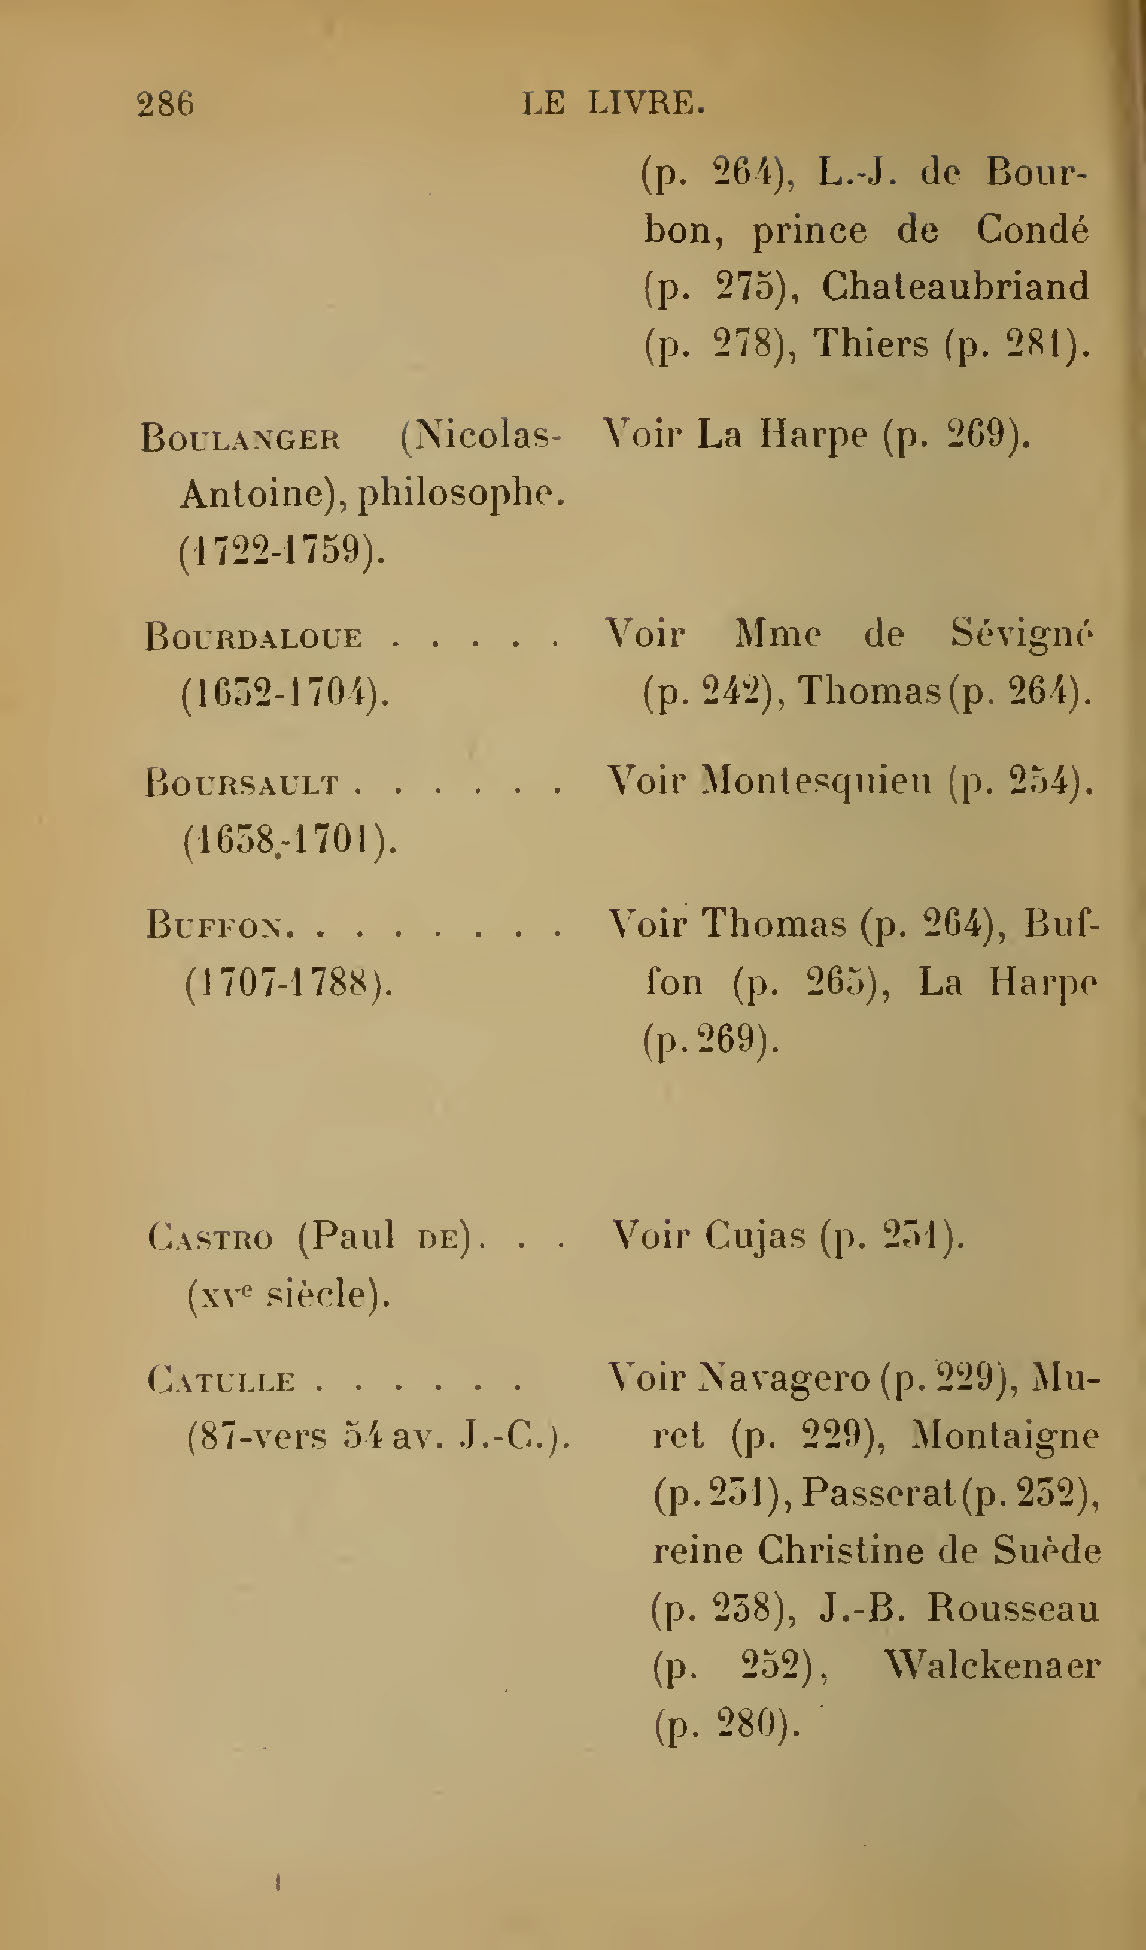 Albert Cim, Le Livre, t. I, p. 286.